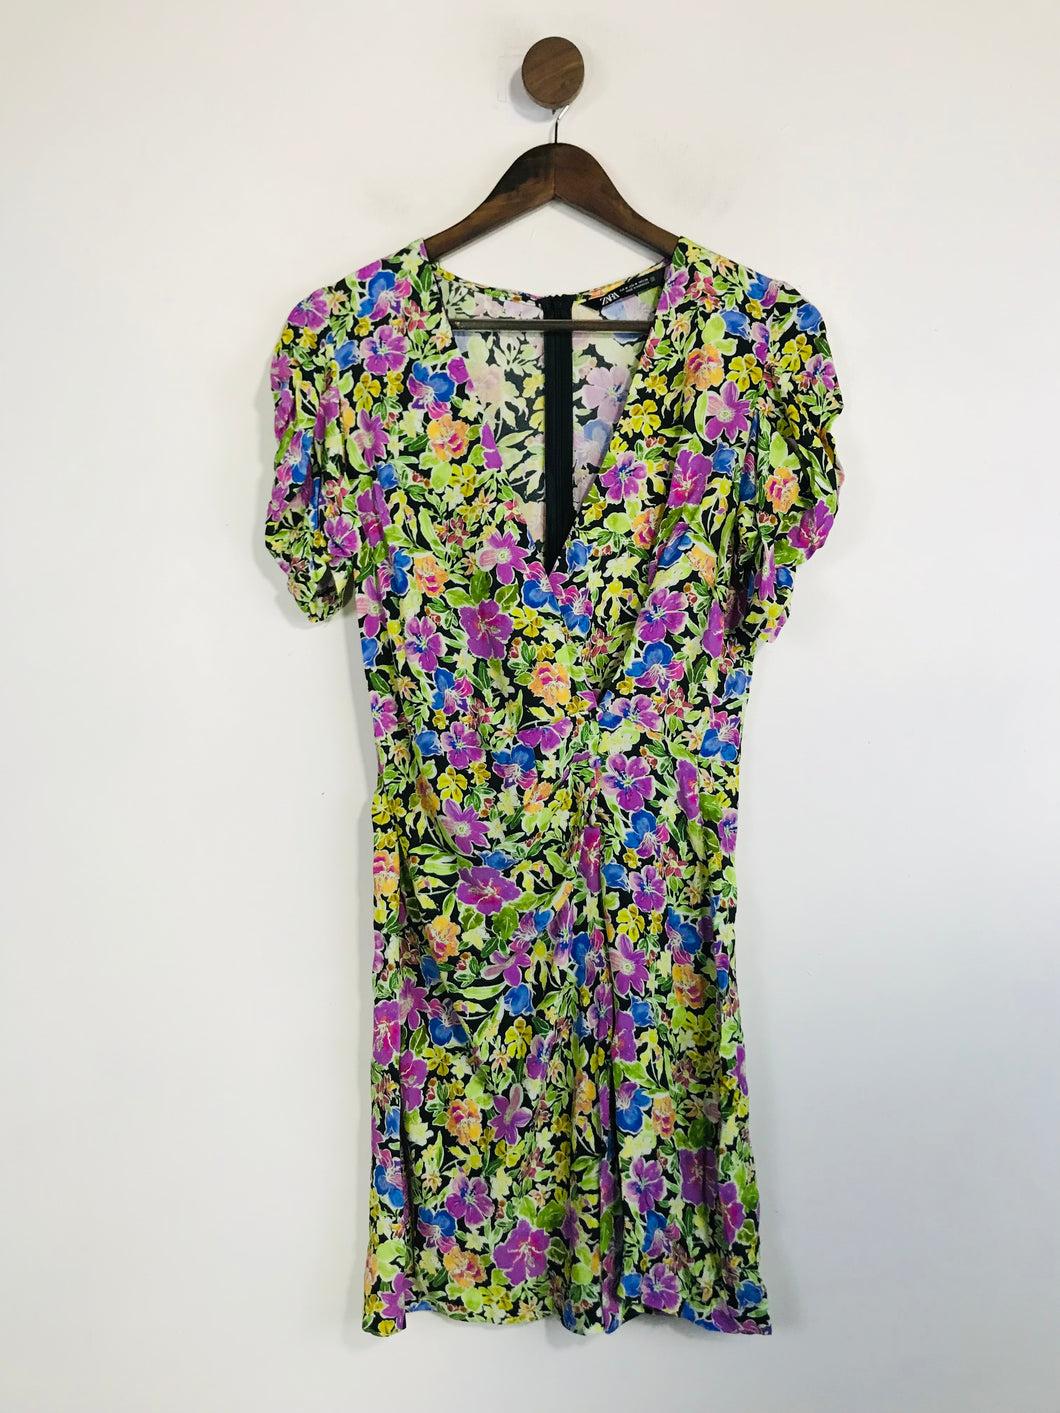 Zara Women's Floral A-Line Dress | M UK10-12 | Multicoloured